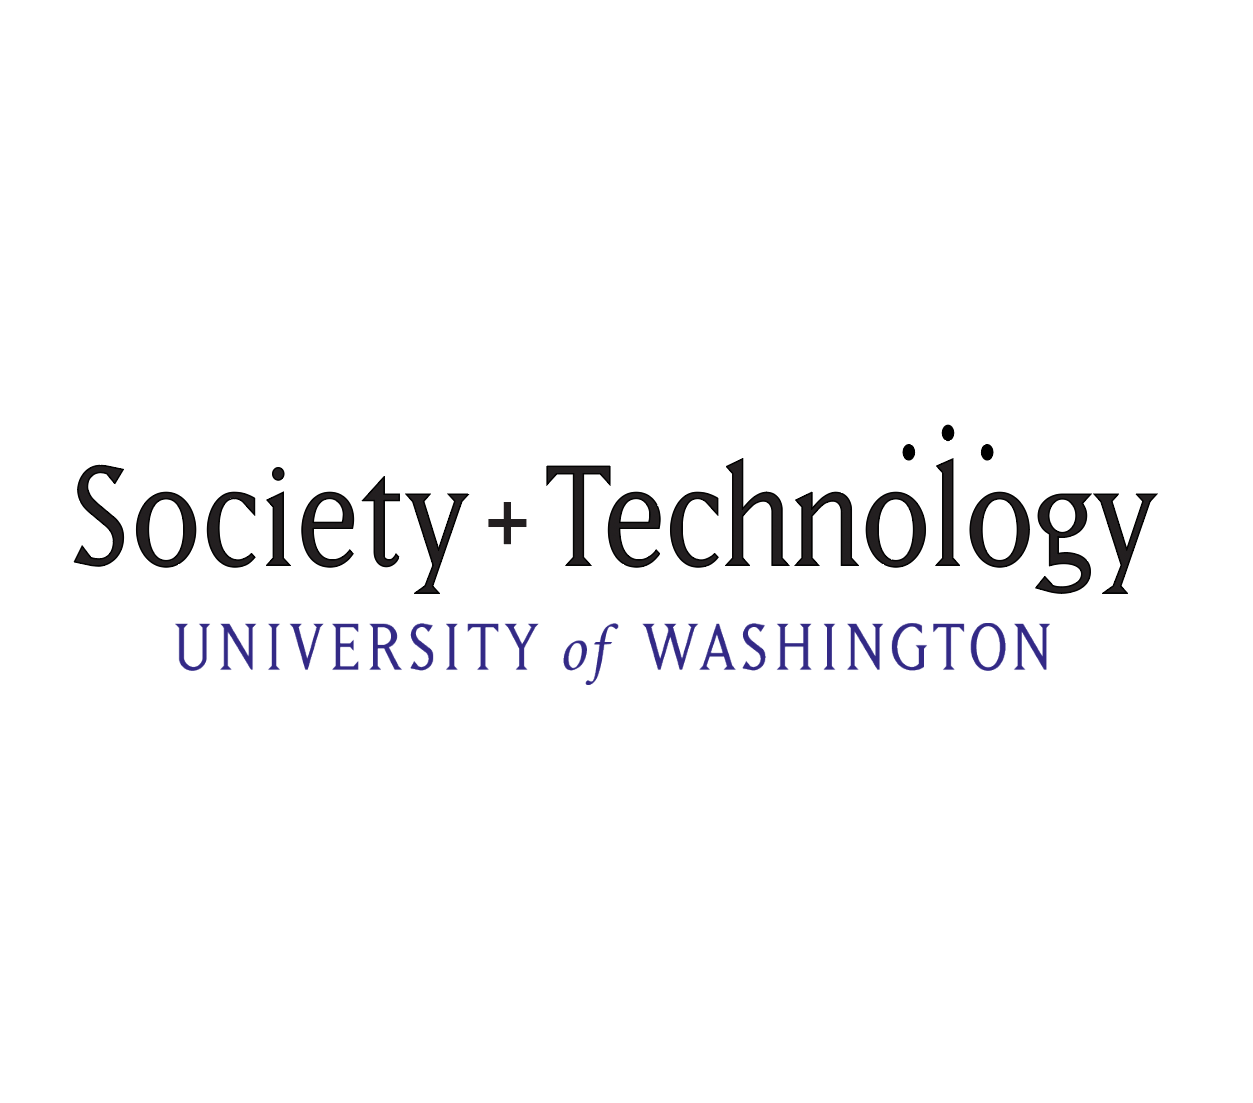 Society + Technology logo